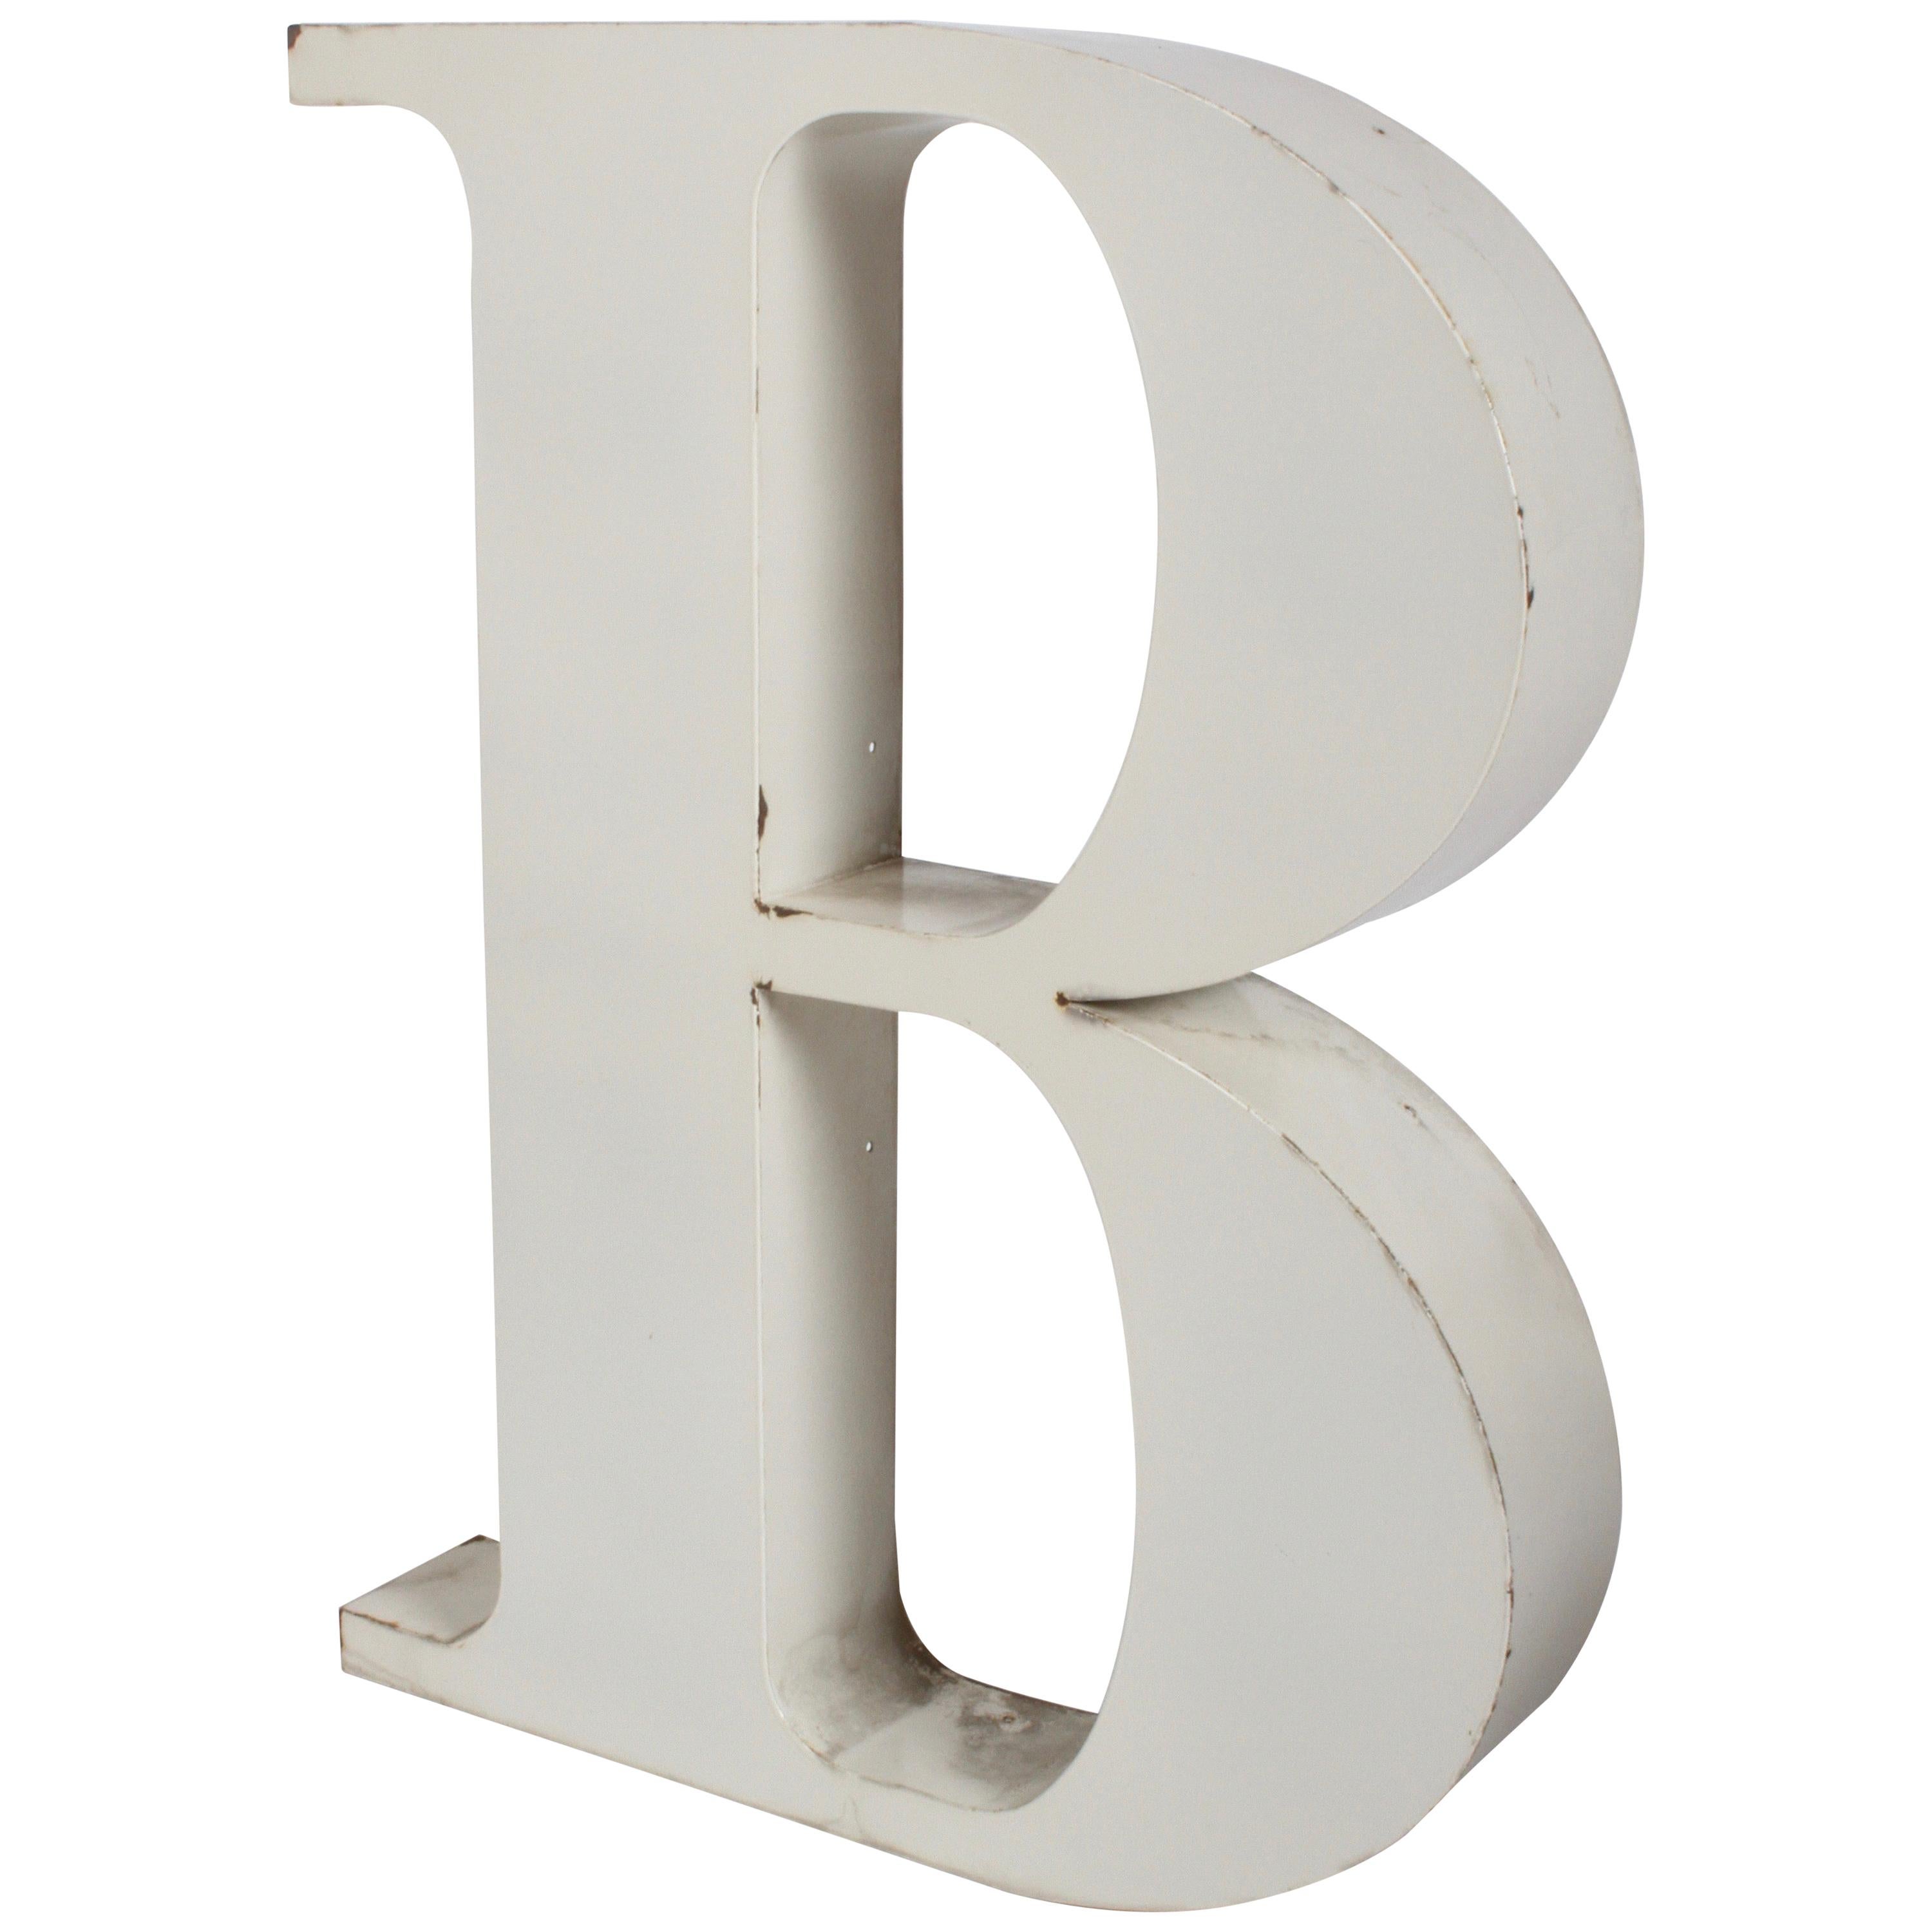 Large Midcentury Porcelain Letter "B" from the Stix Baer and Fuller Sign